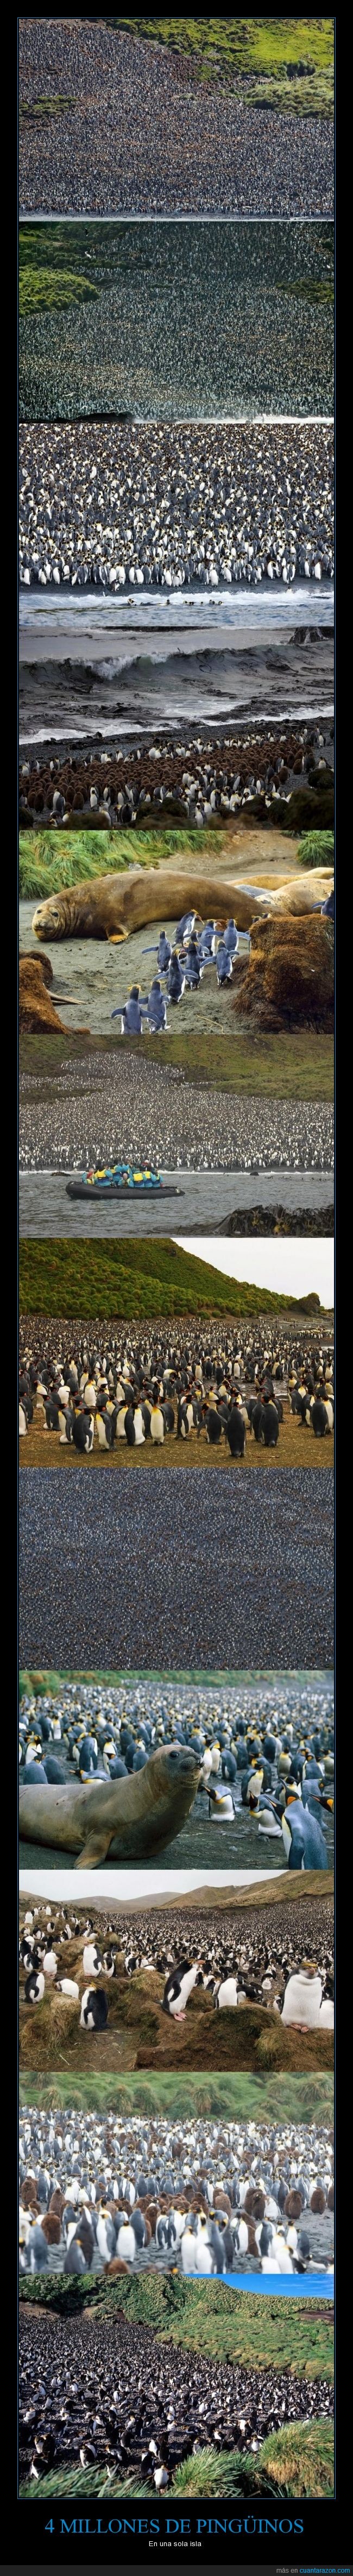 pingüinos,animales,manada,4 millones,isla,increible